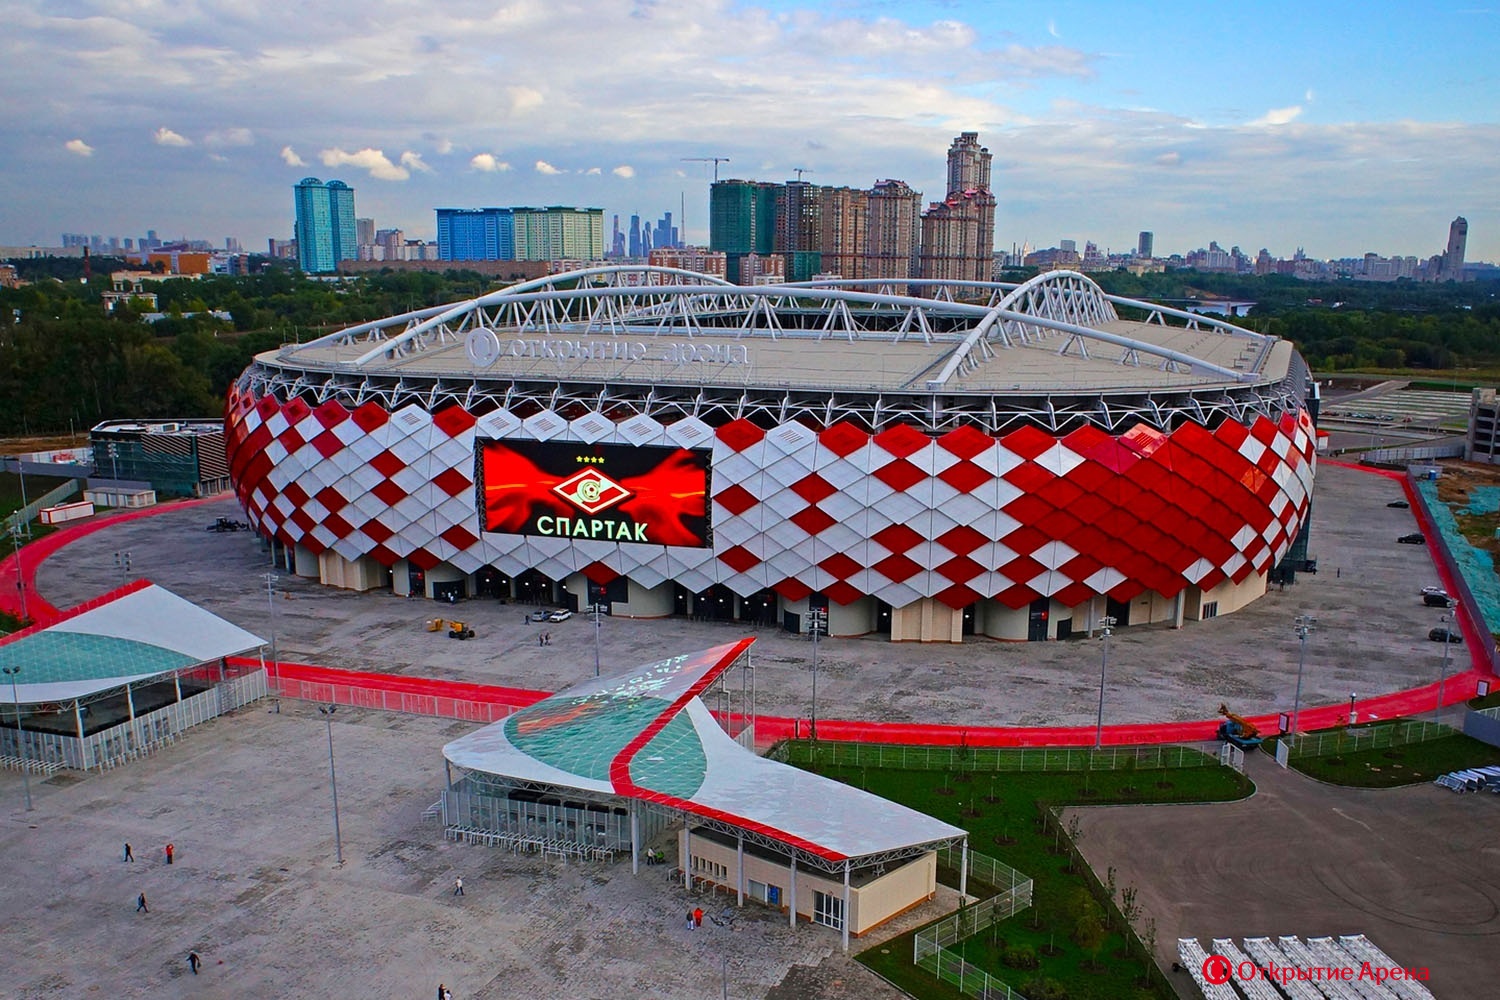 Otkritie Arena Spartak Stadium. Moscow Editorial Image - Image of